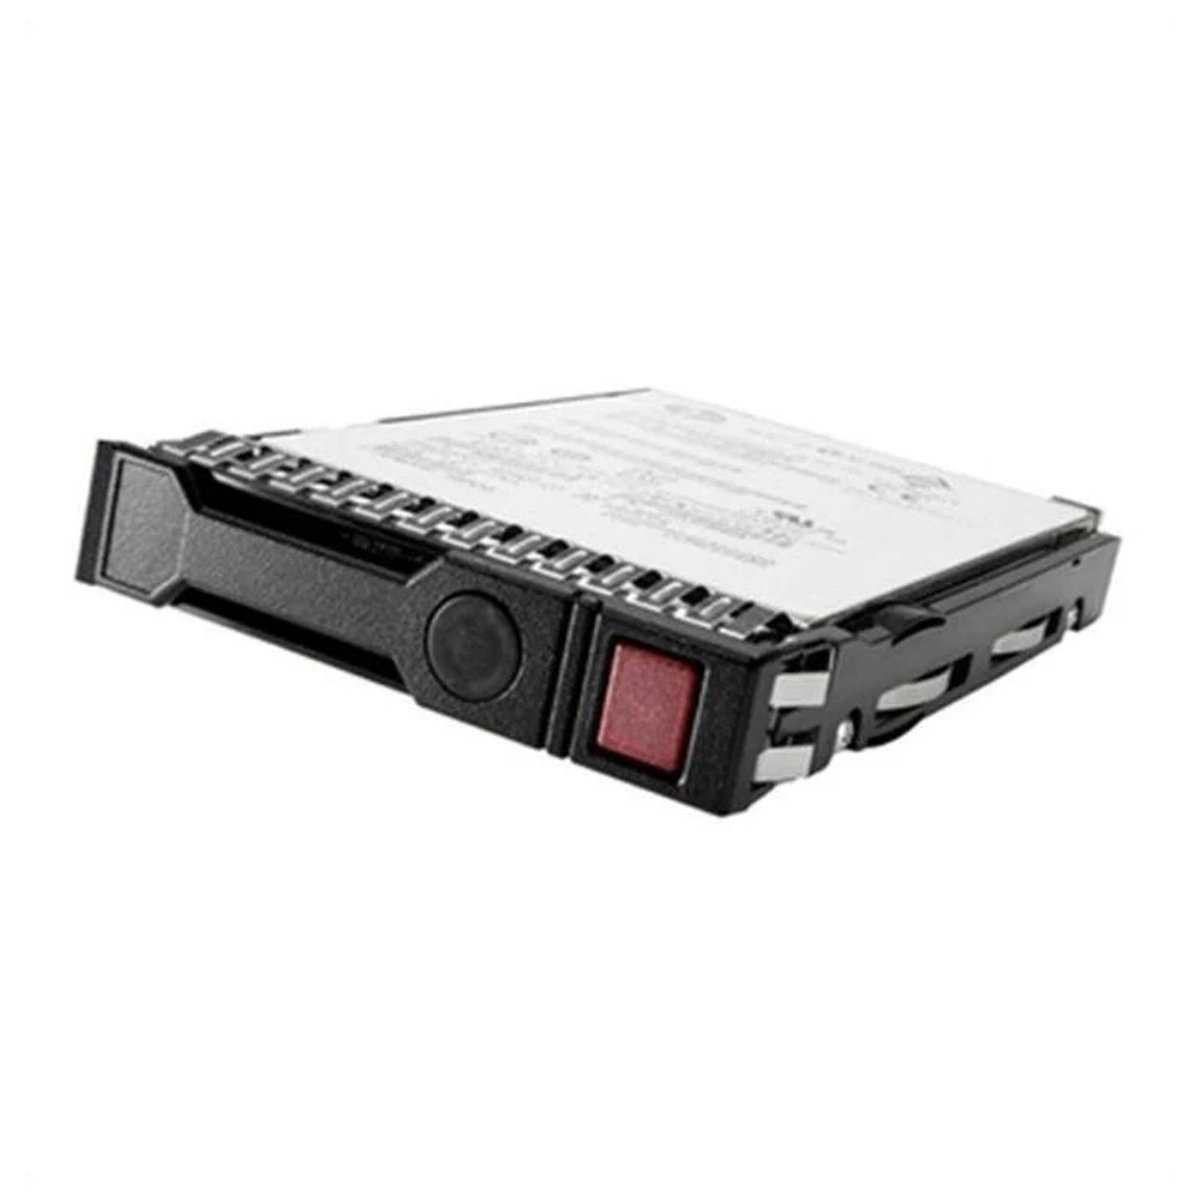 HP 861686-B21, 1 3,5 TB, HDD, intern Zoll